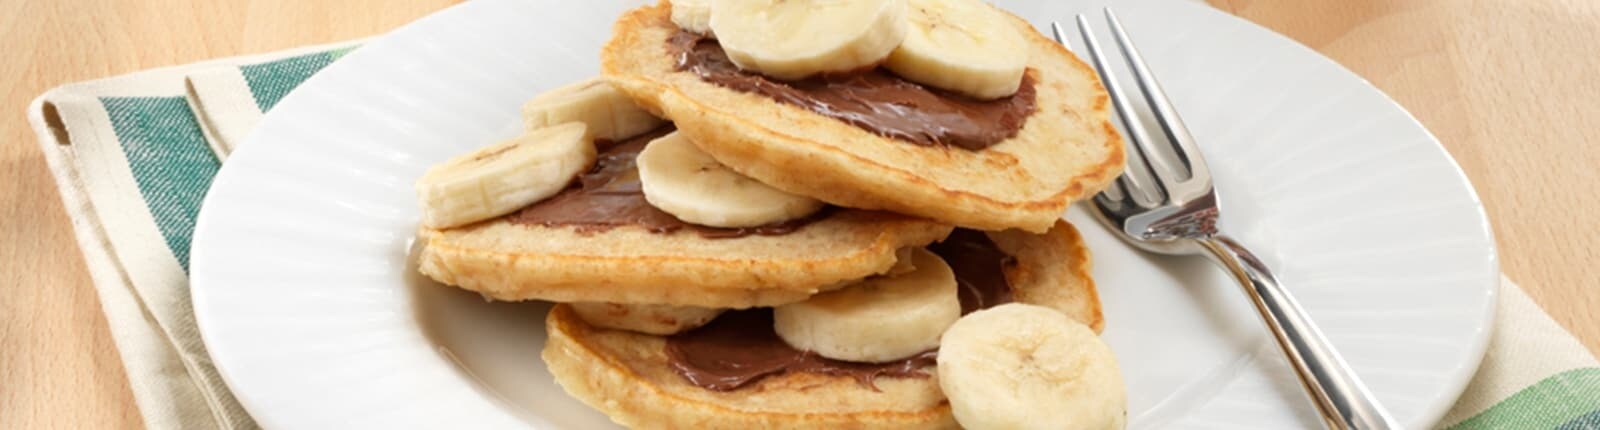 Bananalicious Nutella® pancakes